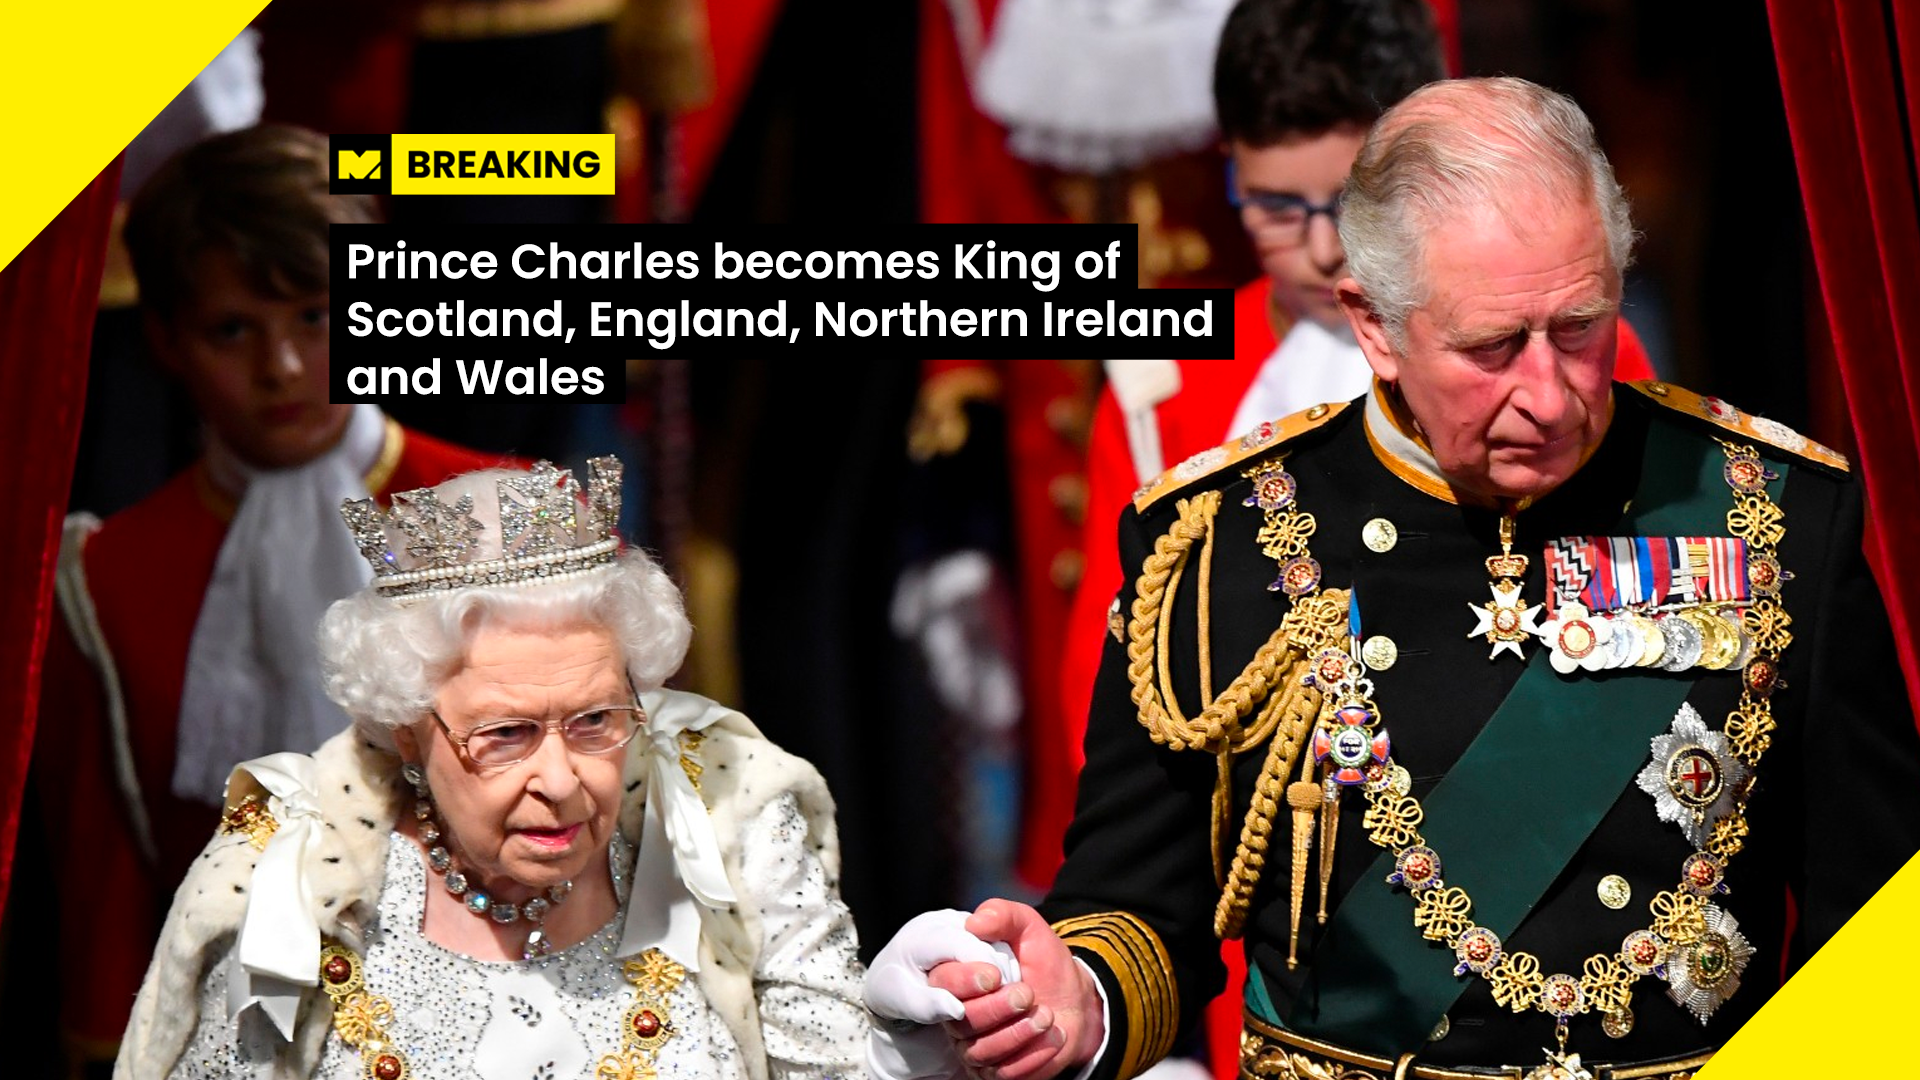 Prince Charles becomes King of Scotland, England, Northern Ireland and Wales